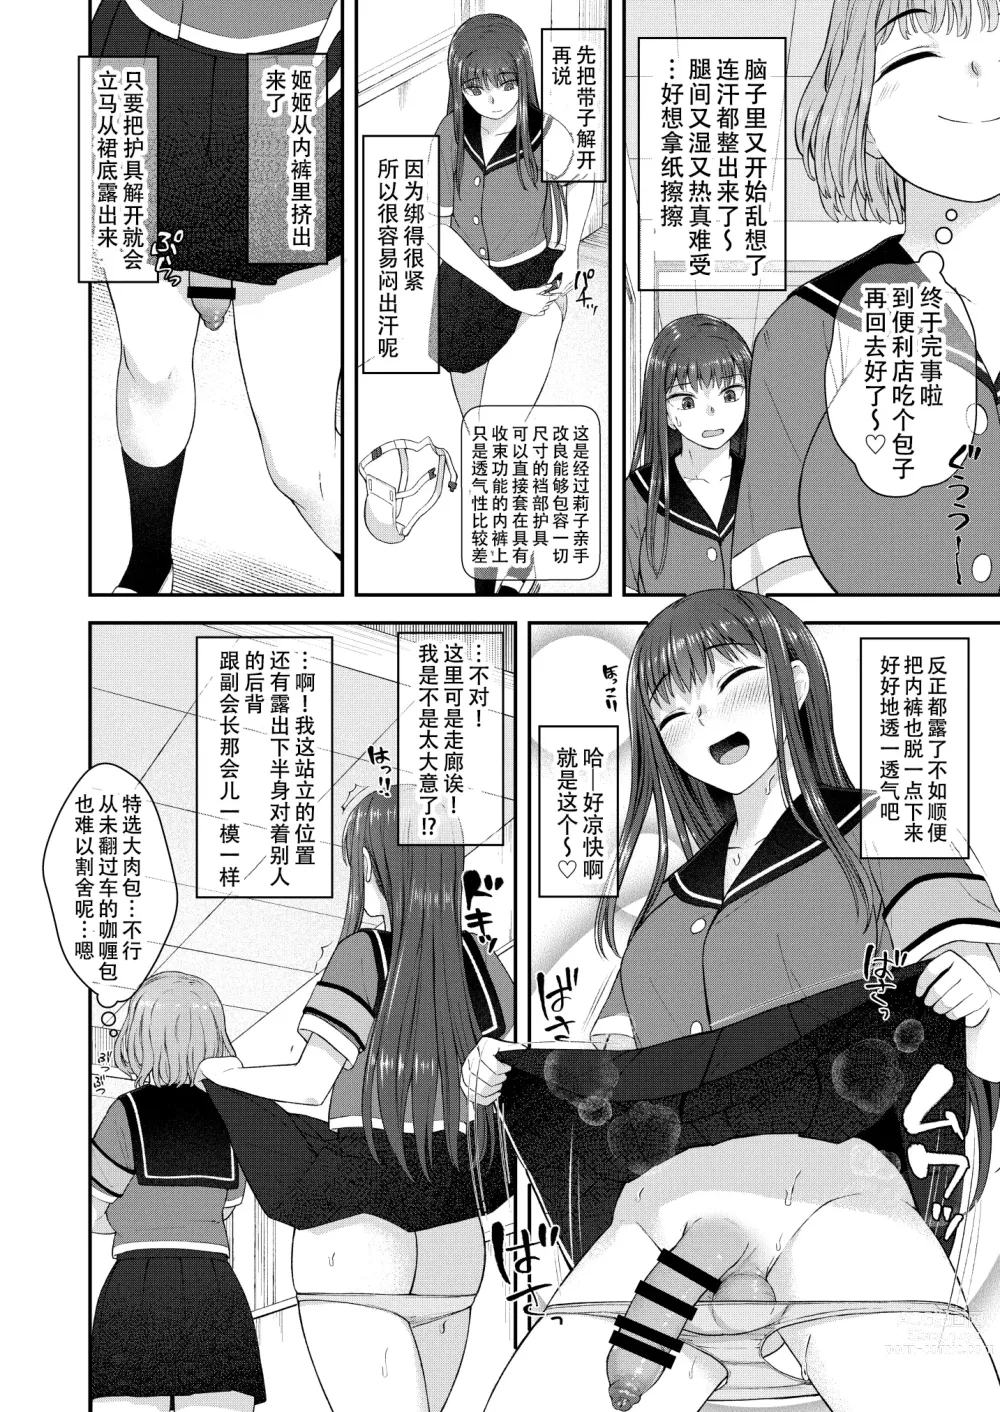 Page 8 of doujinshi 放课后的自拍少女2 那个露出男性性器并且自拍的变态只有她知道其真面目.